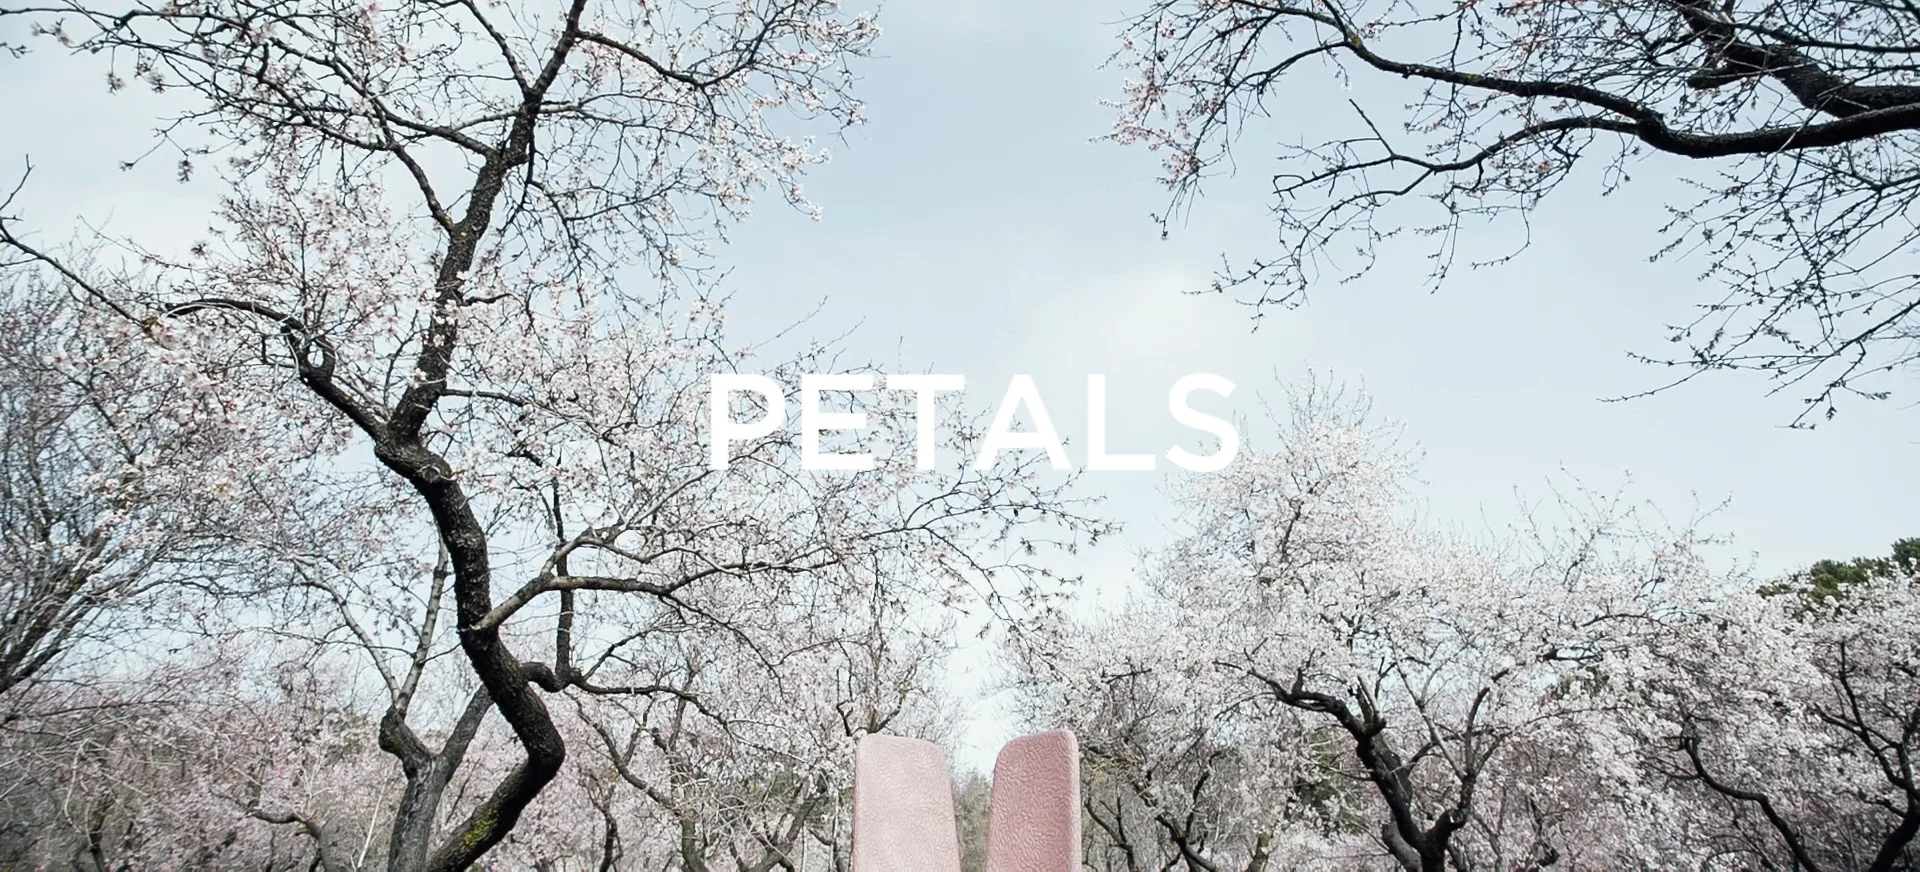 Petals Chair by Stone designs (Short edit)  